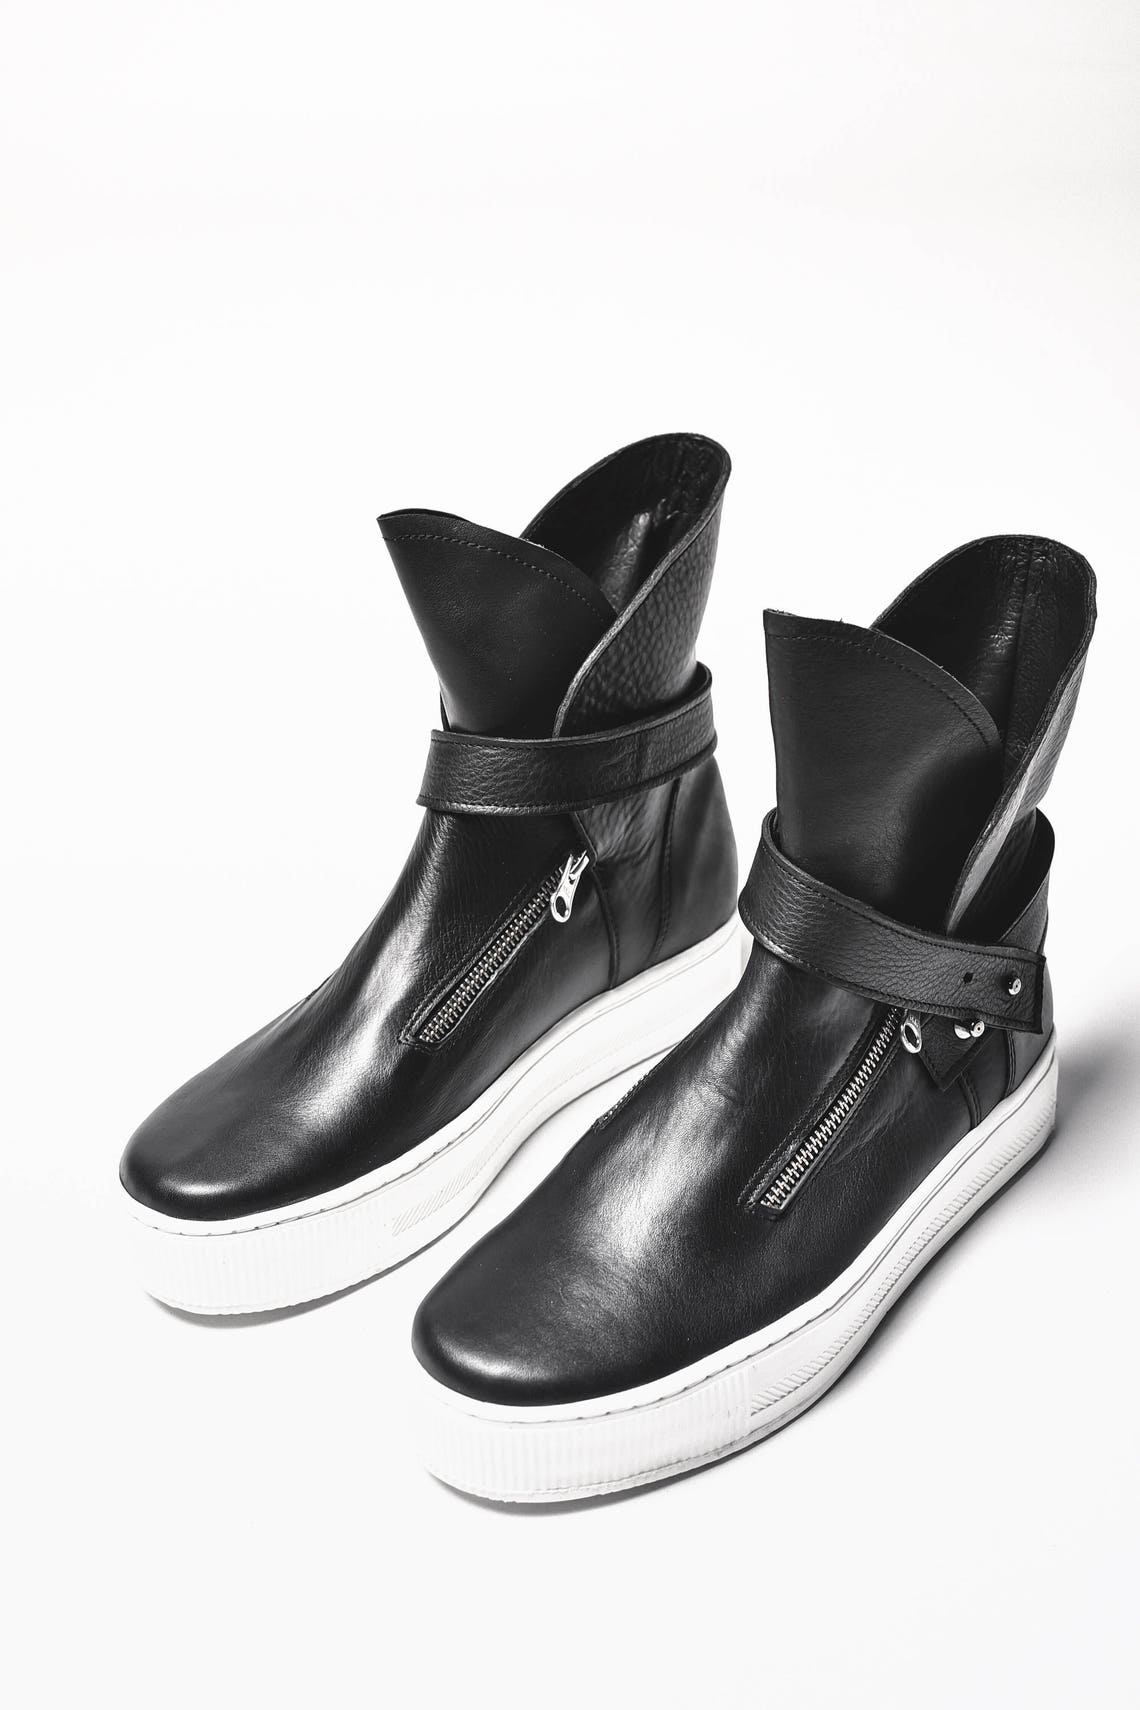 New 2016 Black High Top Zipper Sneakers Handmade by Aakashamen - Etsy